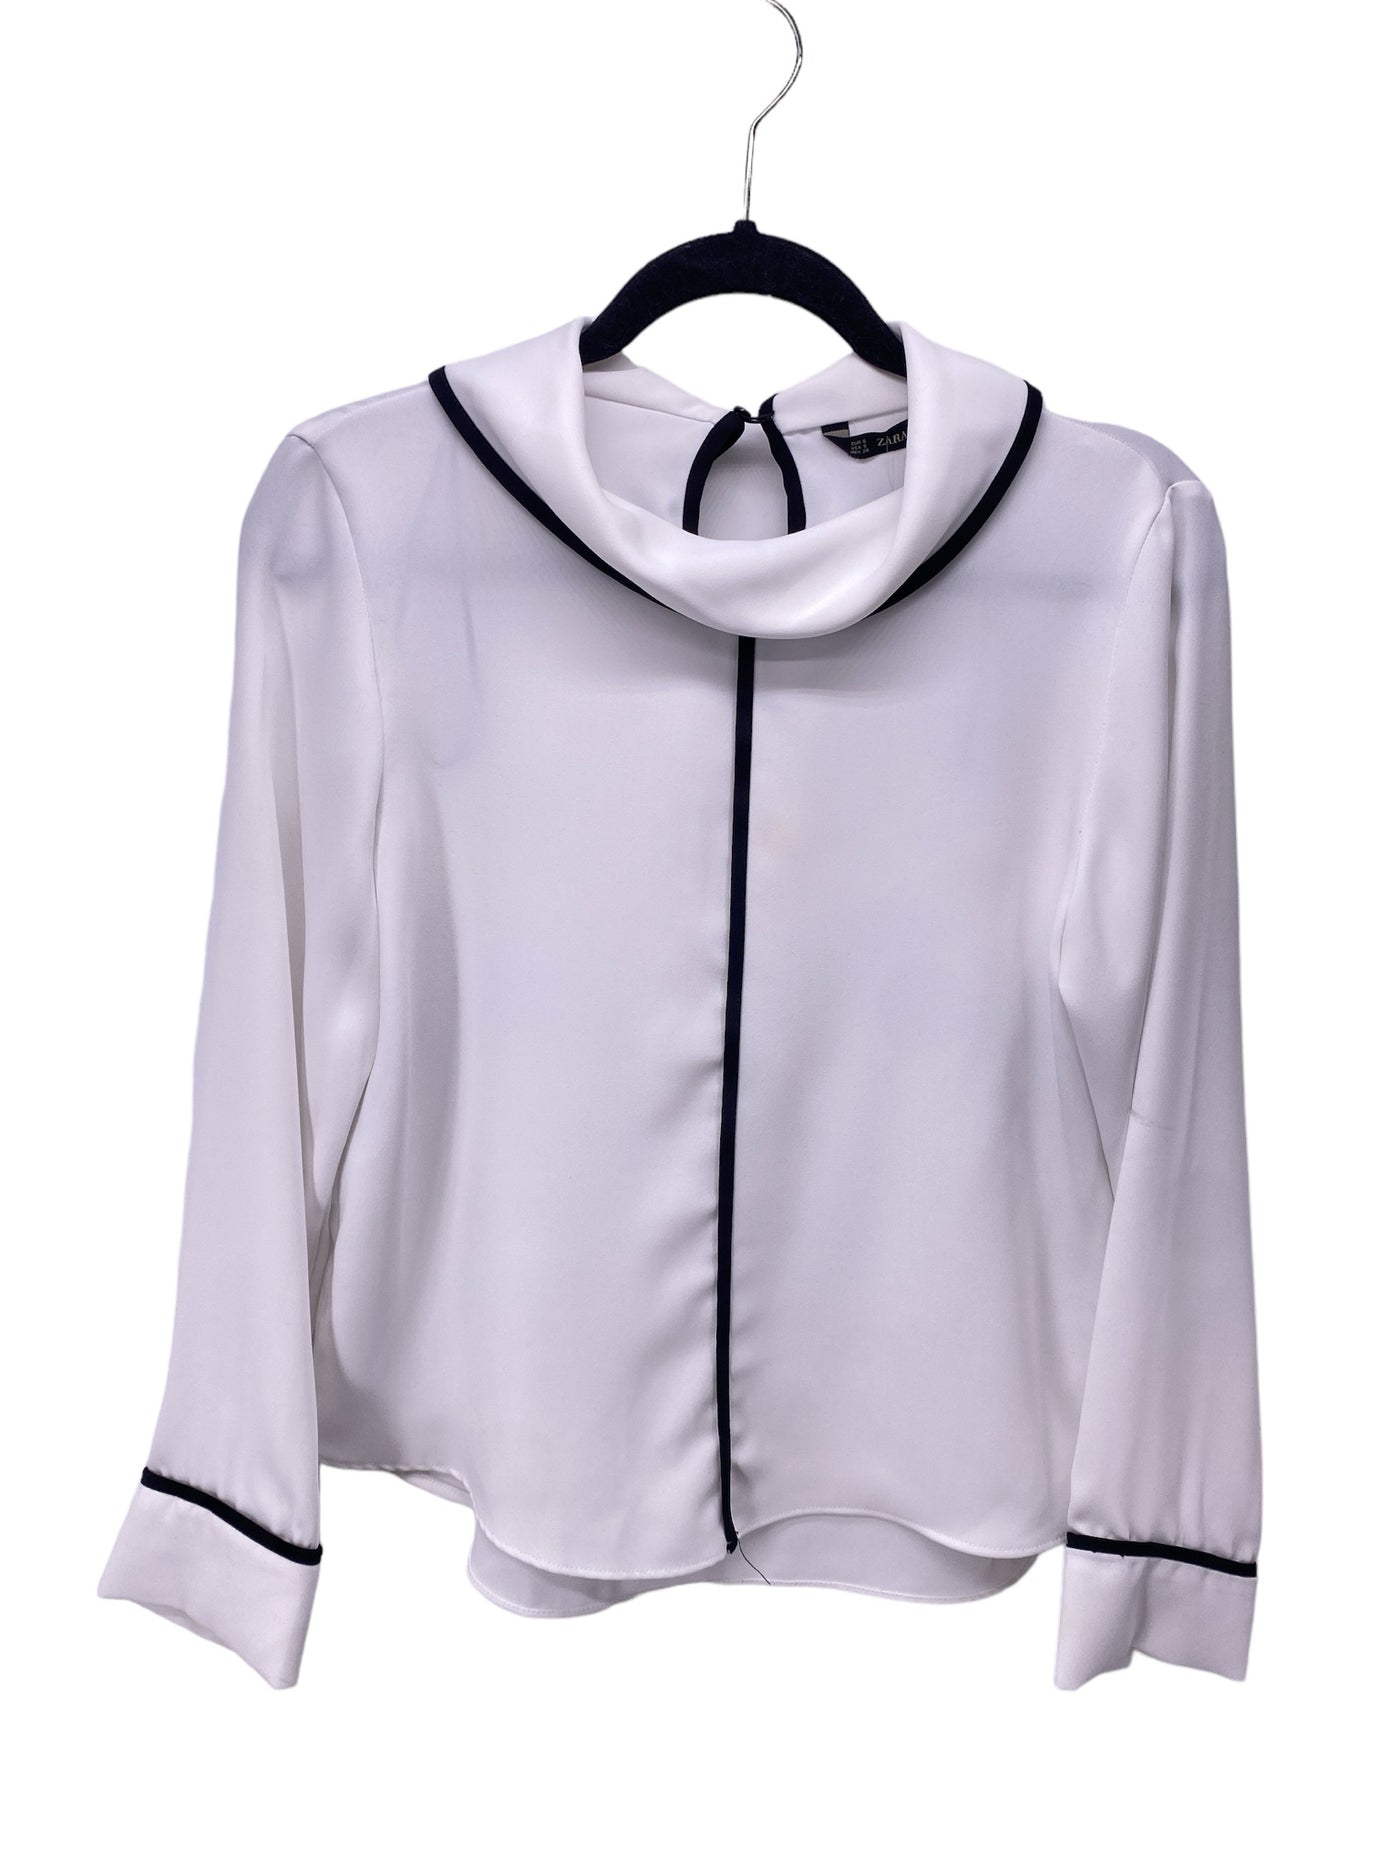 Zara Misses Size Small White LS Blouse